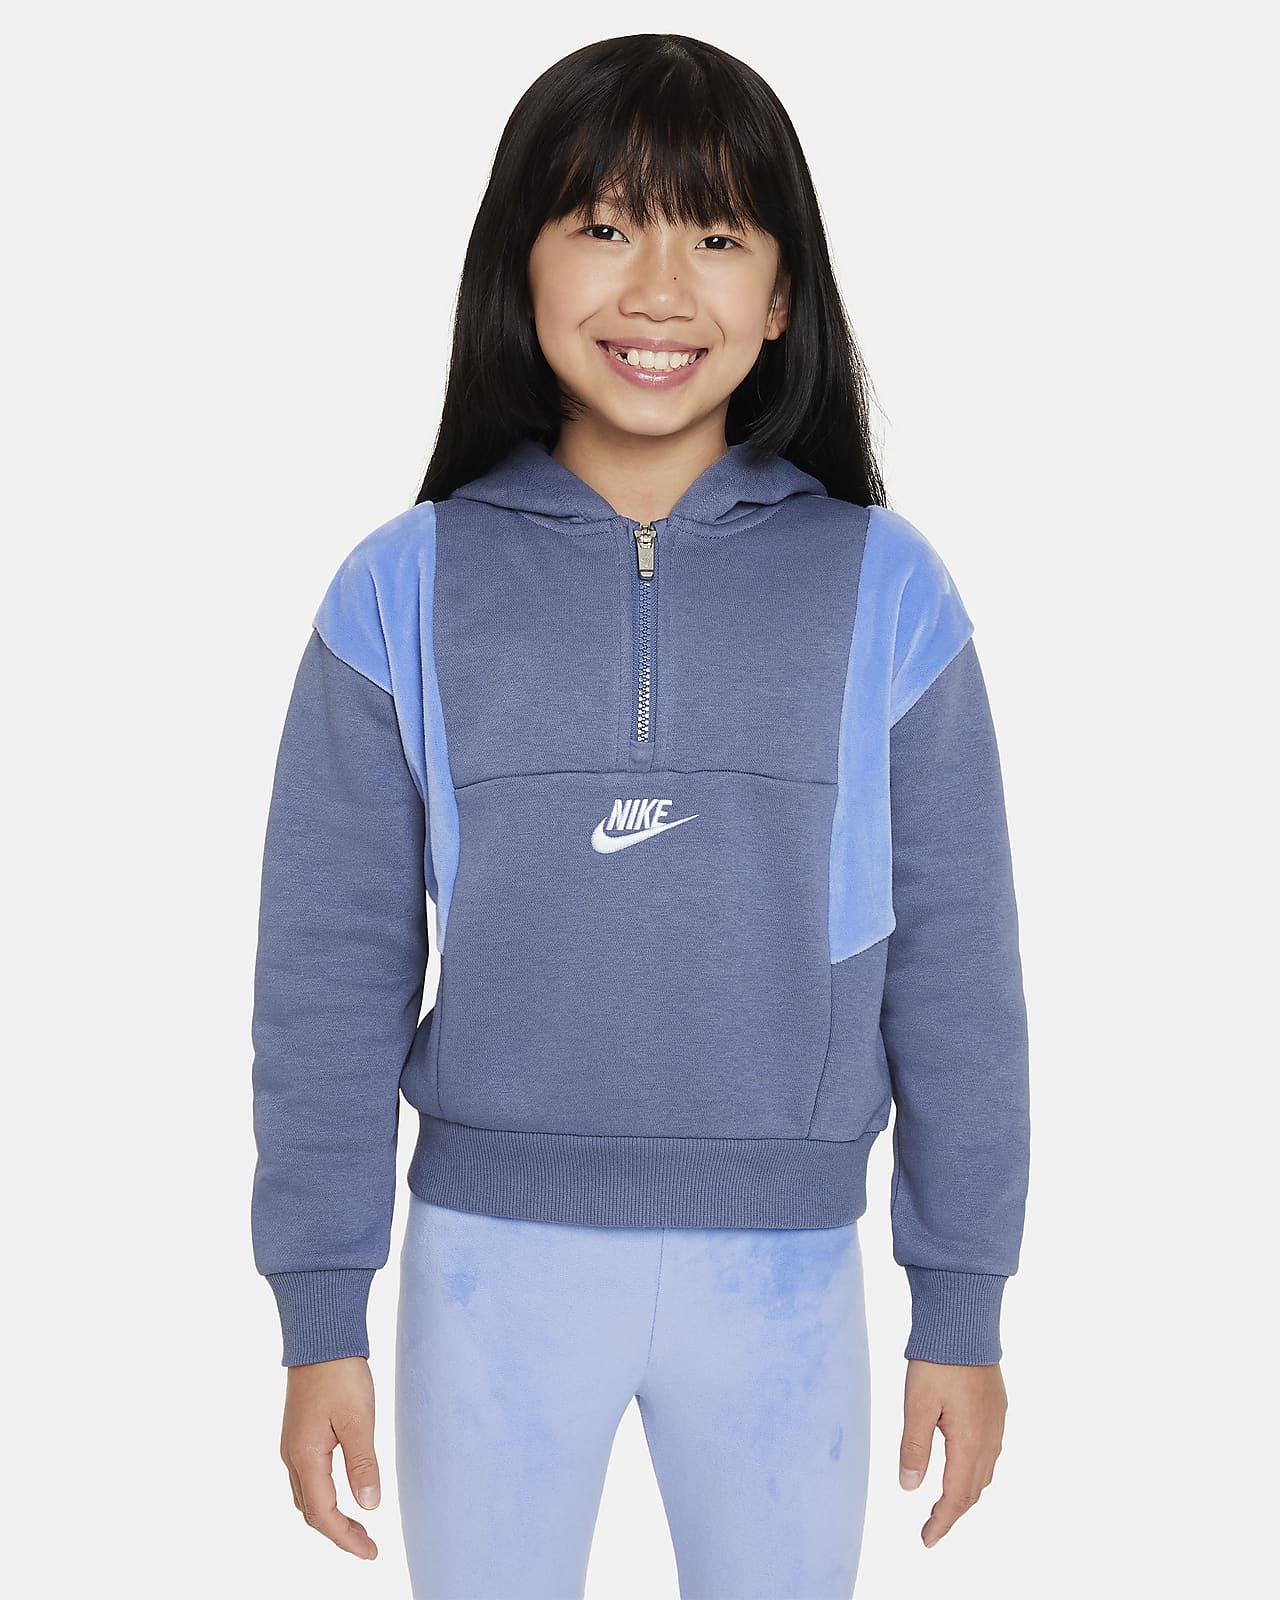 Girls 4-6x Nike Swoosh Home Sweatshirt and Leggings Set